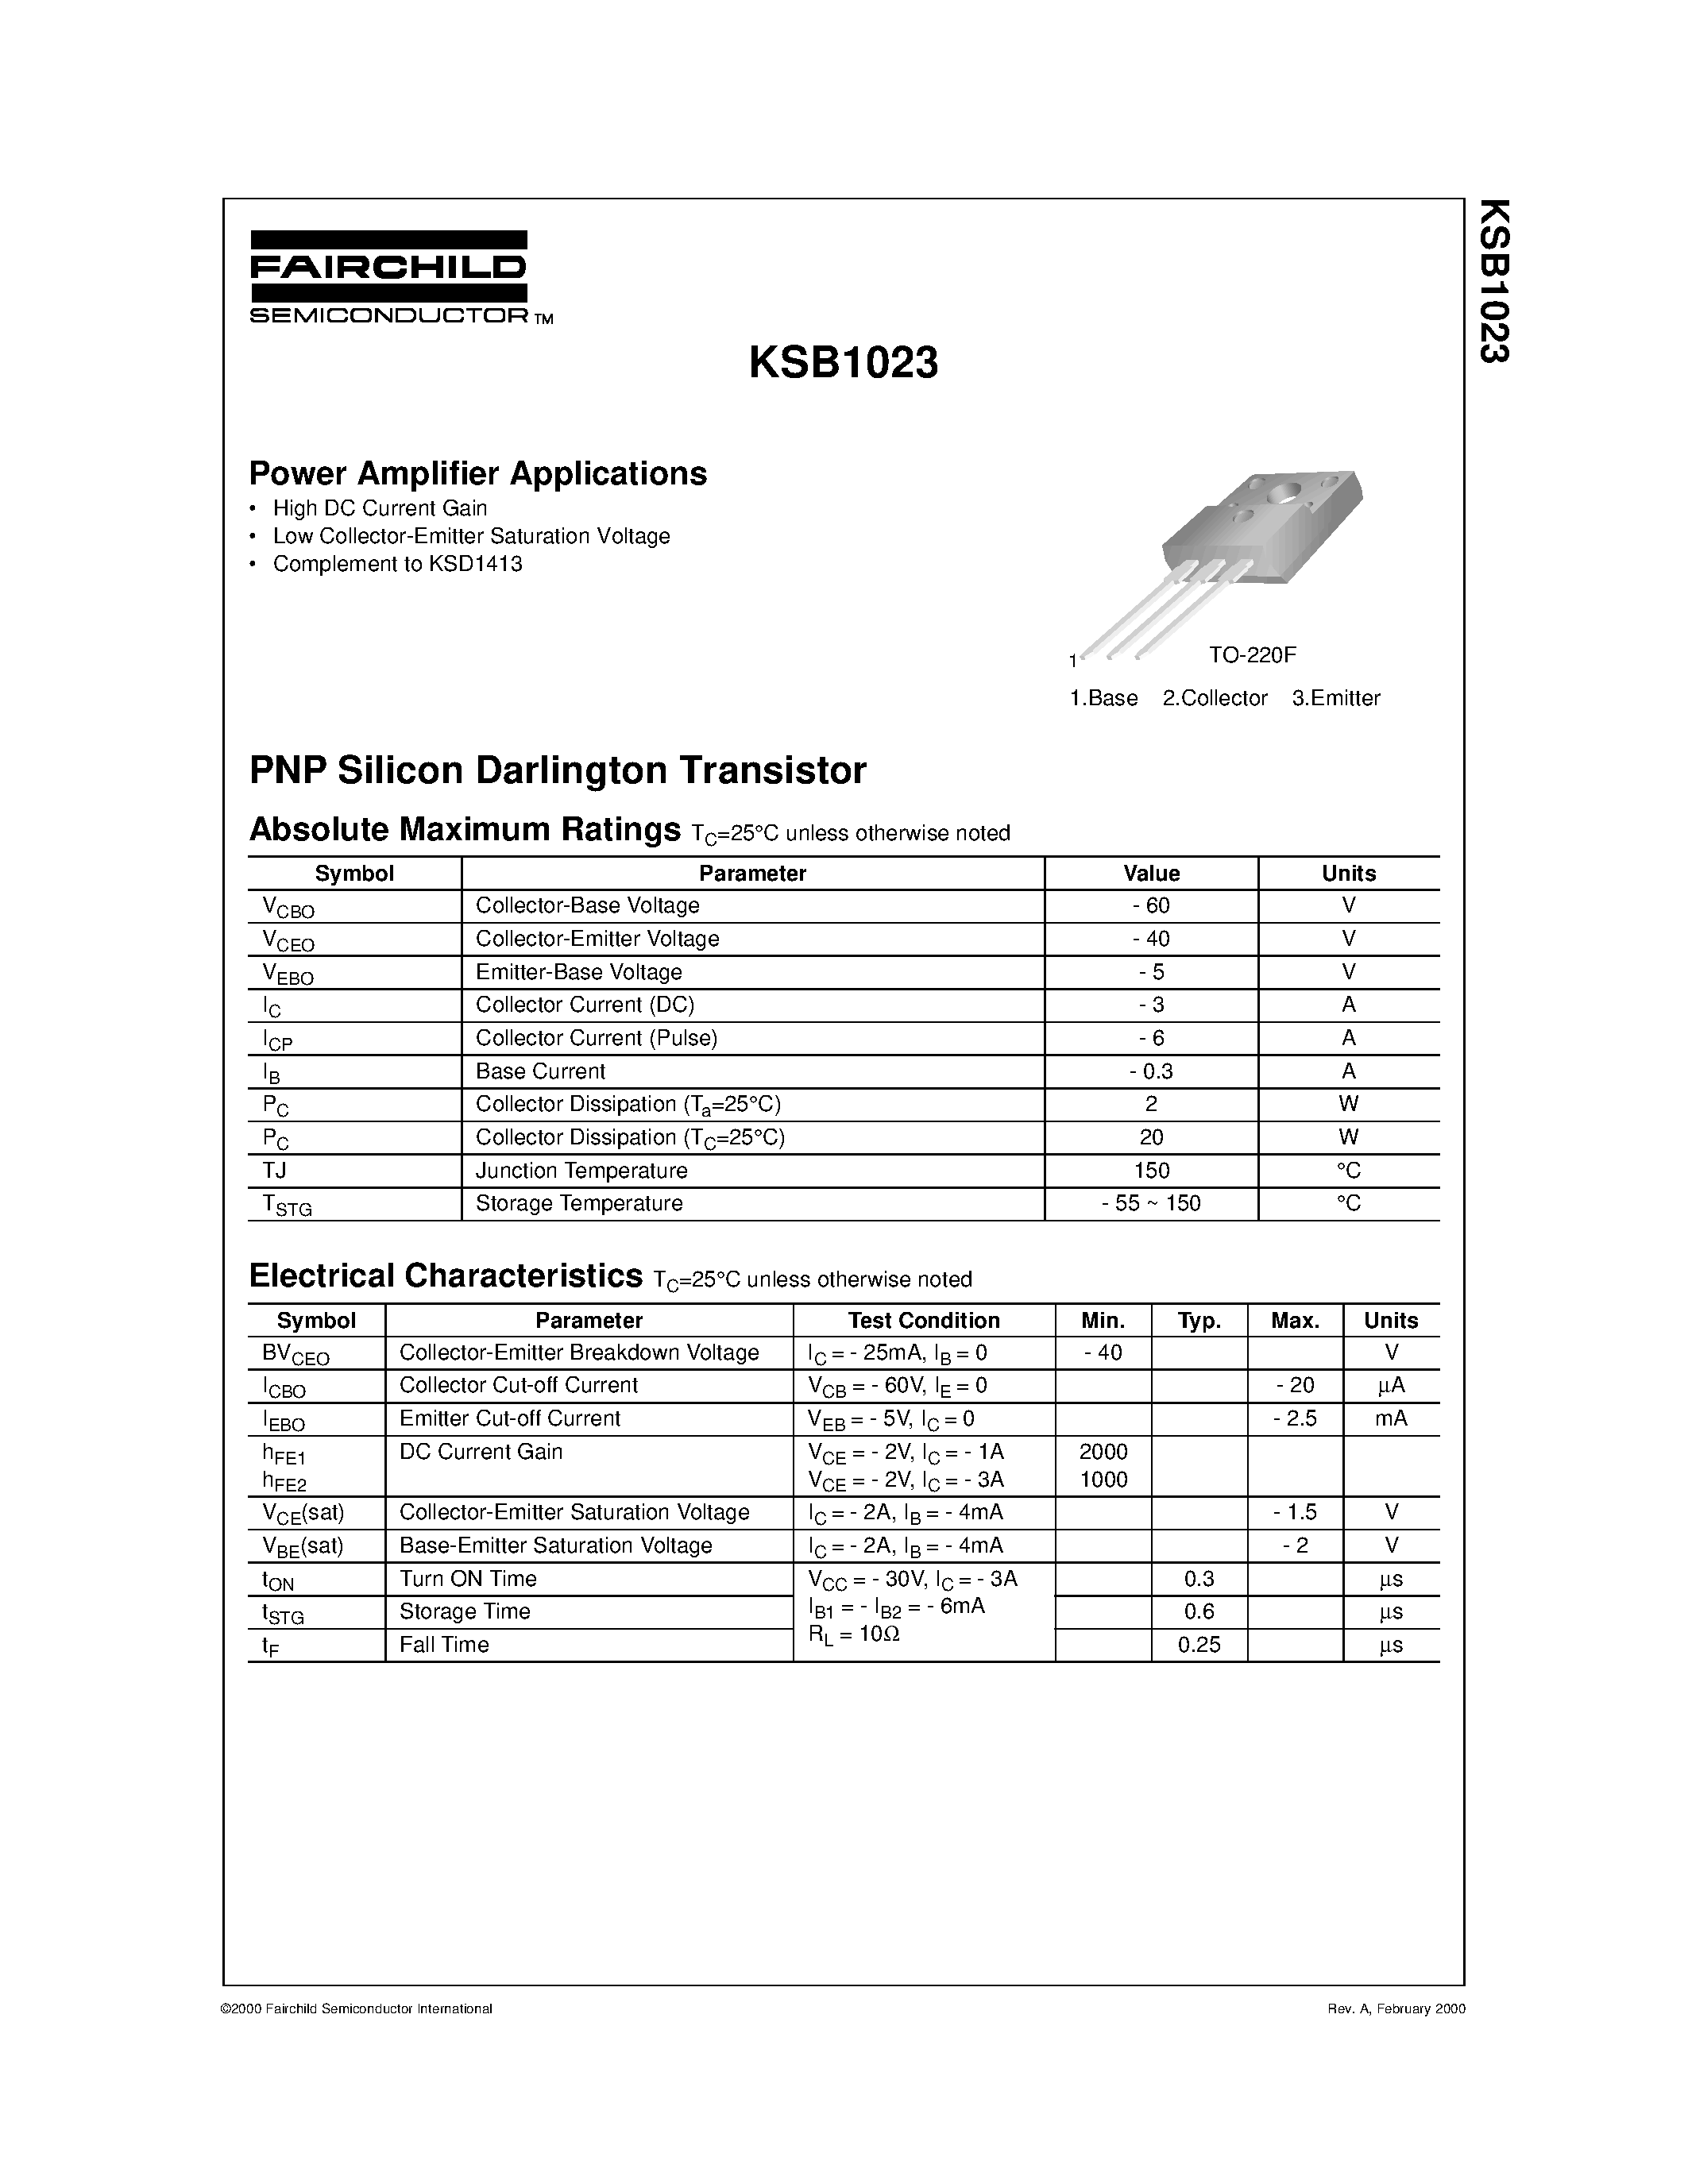 Datasheet KSB1023 - Power Amplifier Applications page 1